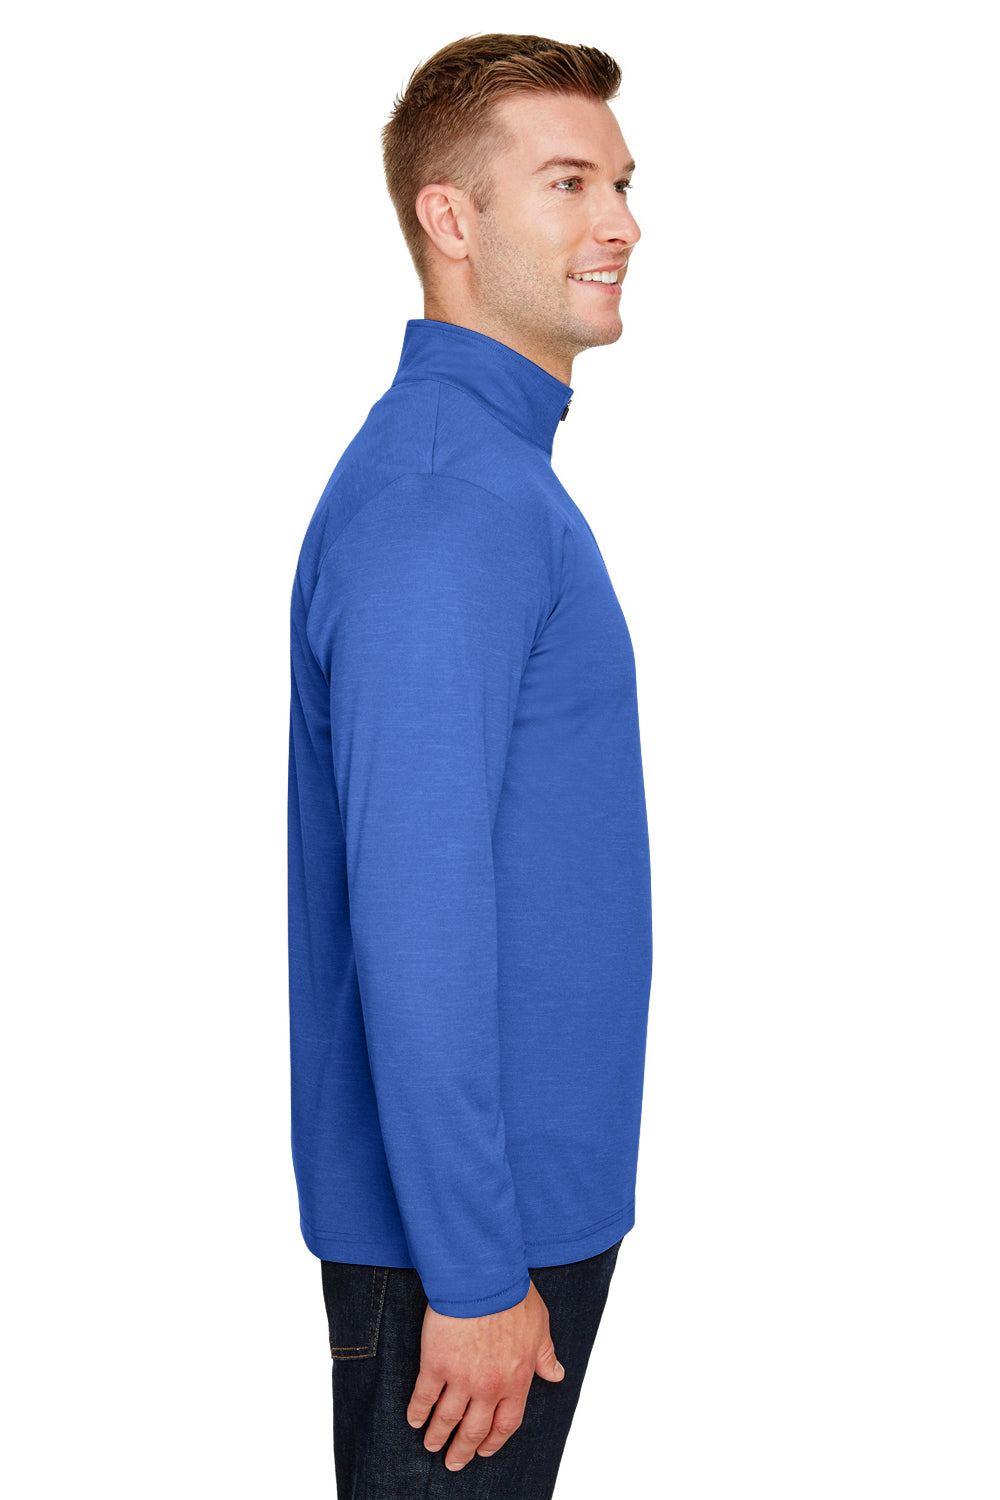 Team 365 TT31H Mens Zone Sonic Performance Moisture Wicking 1/4 Zip Sweatshirt Royal Blue Side